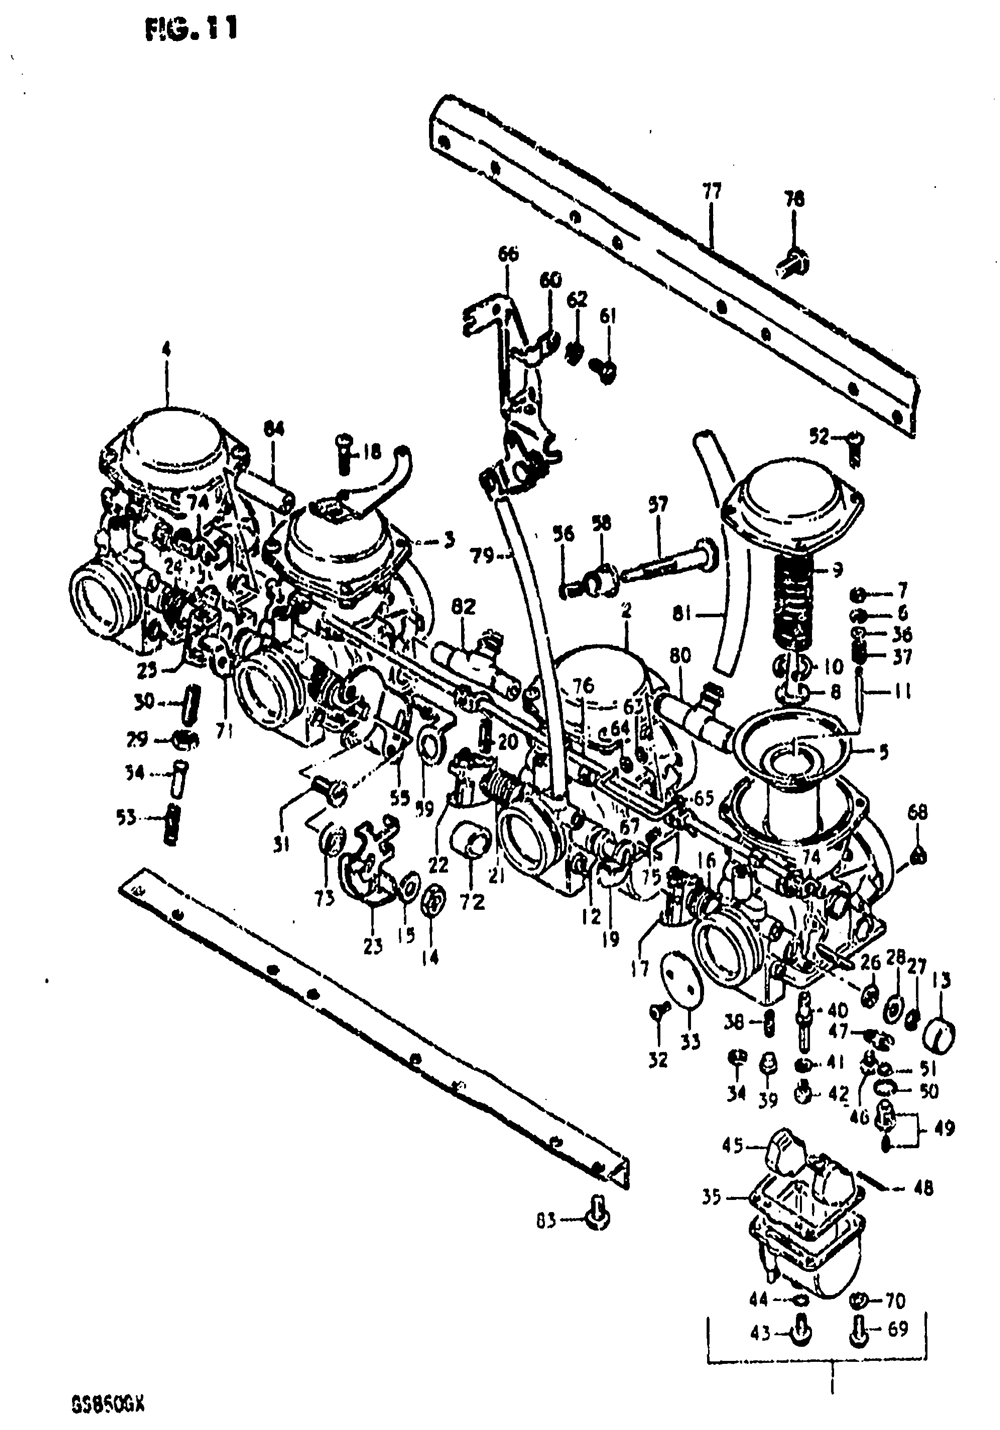 Carburetor